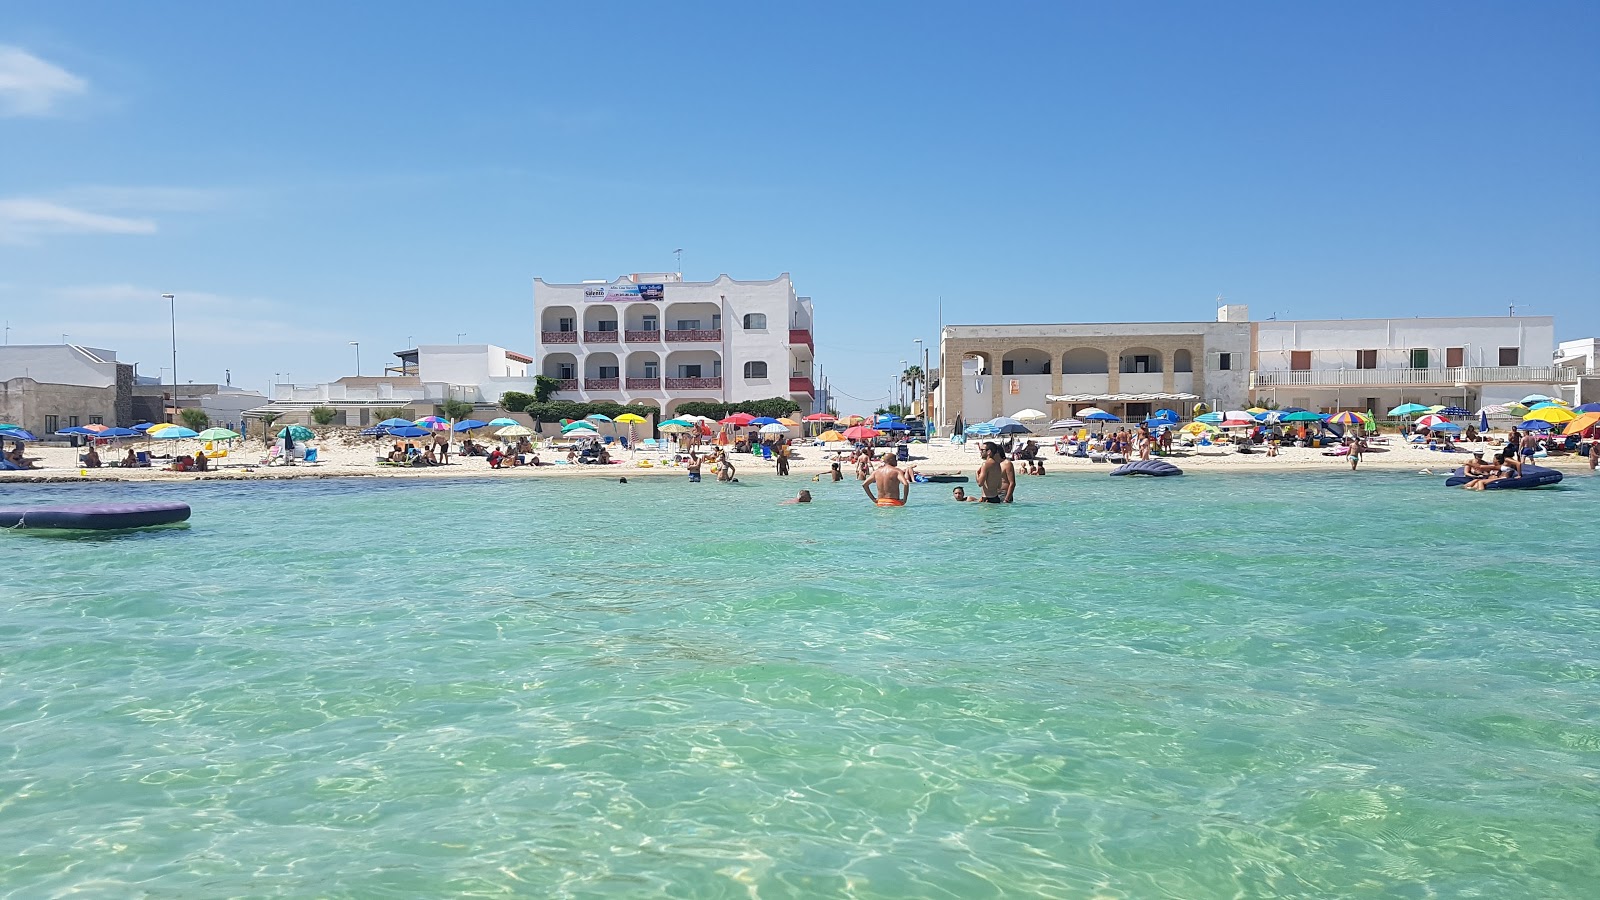 Foto de Spiaggia Porto Cesareo con playa amplia